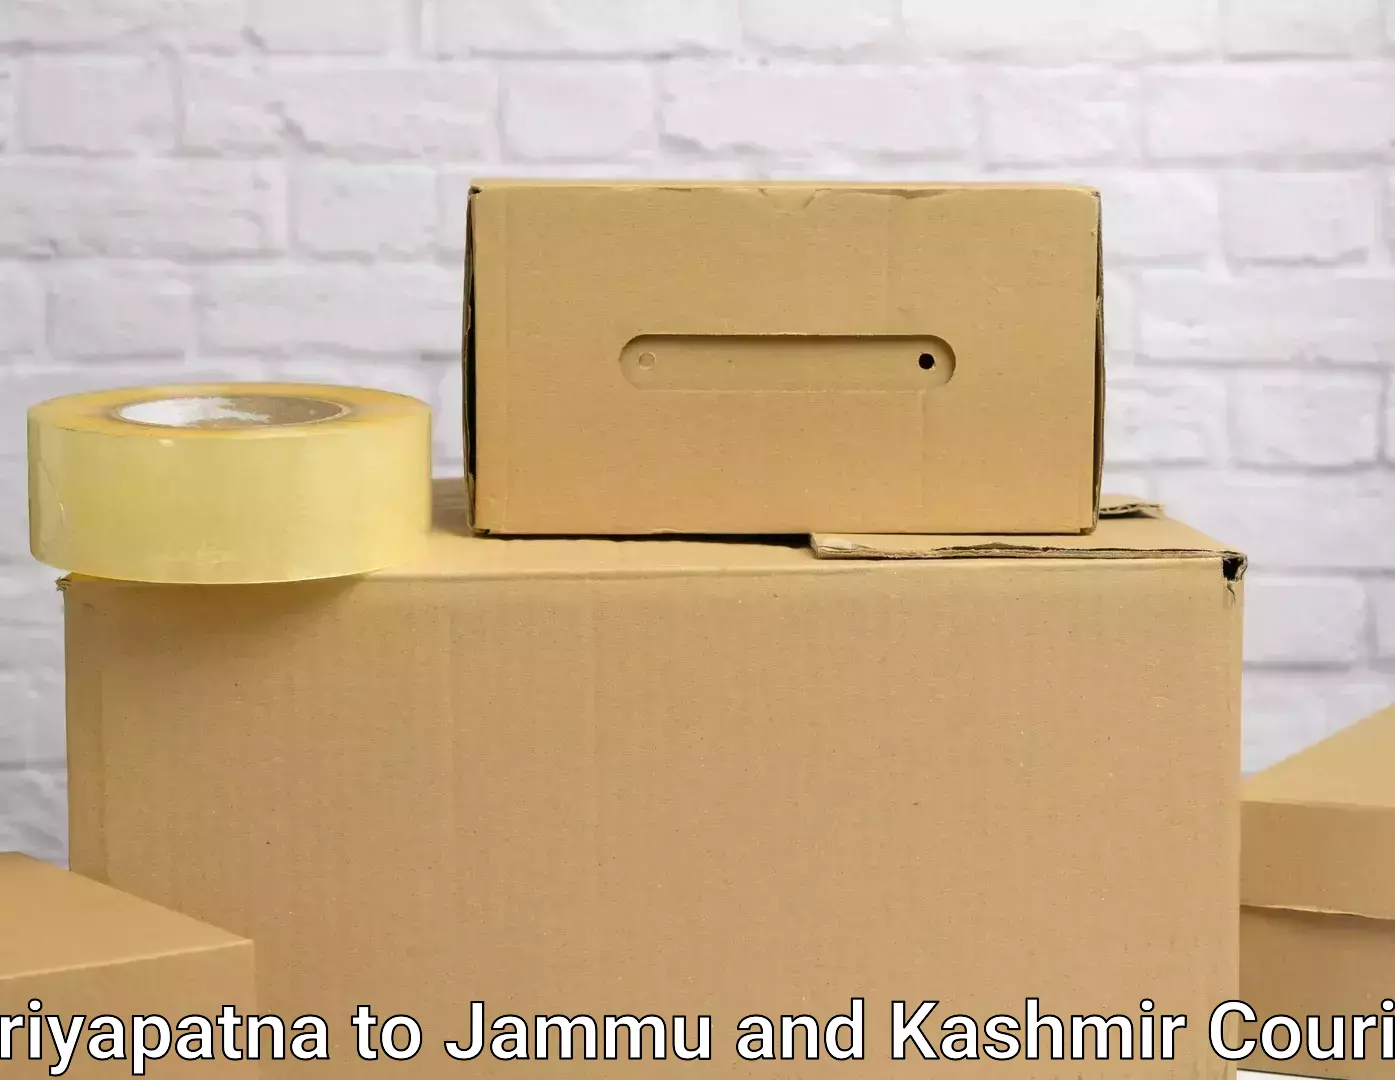 Home relocation experts Piriyapatna to Srinagar Kashmir